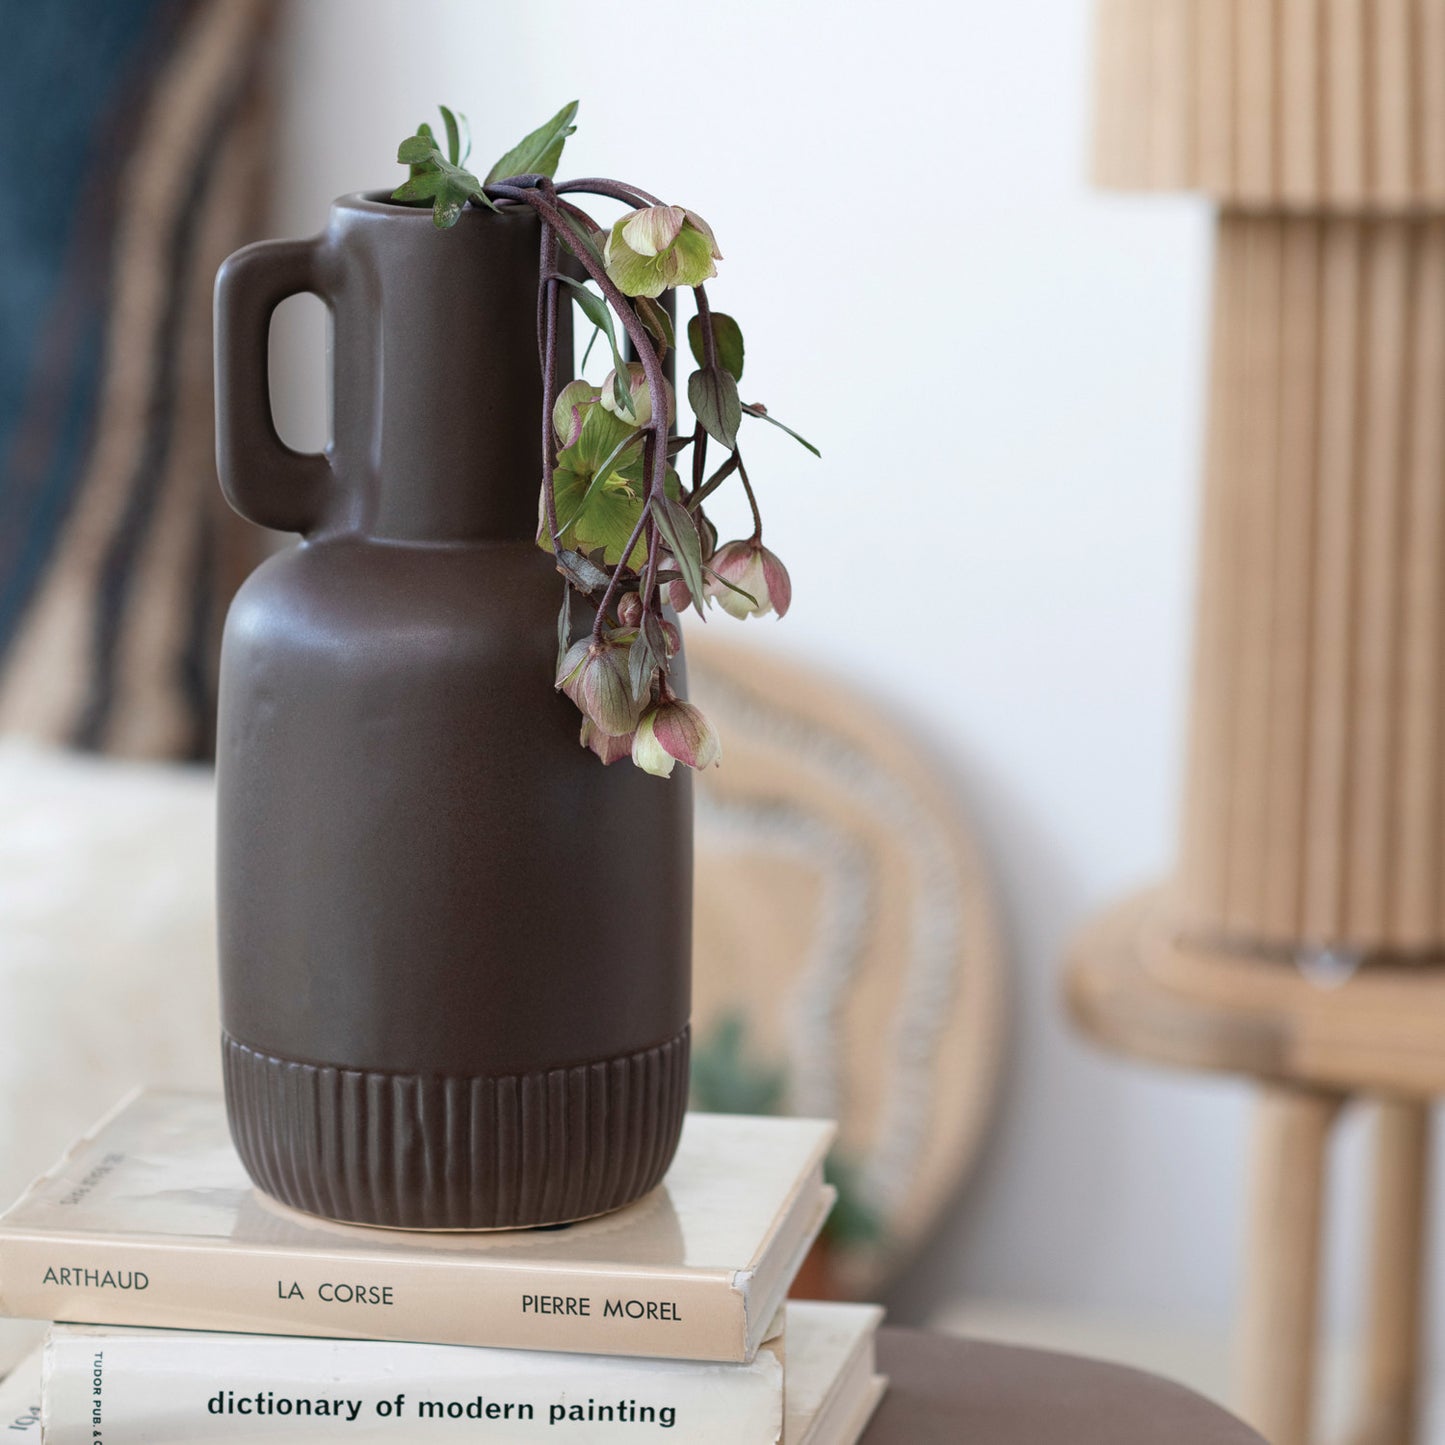 Matte Brown Ceramic Vase w/ Handles